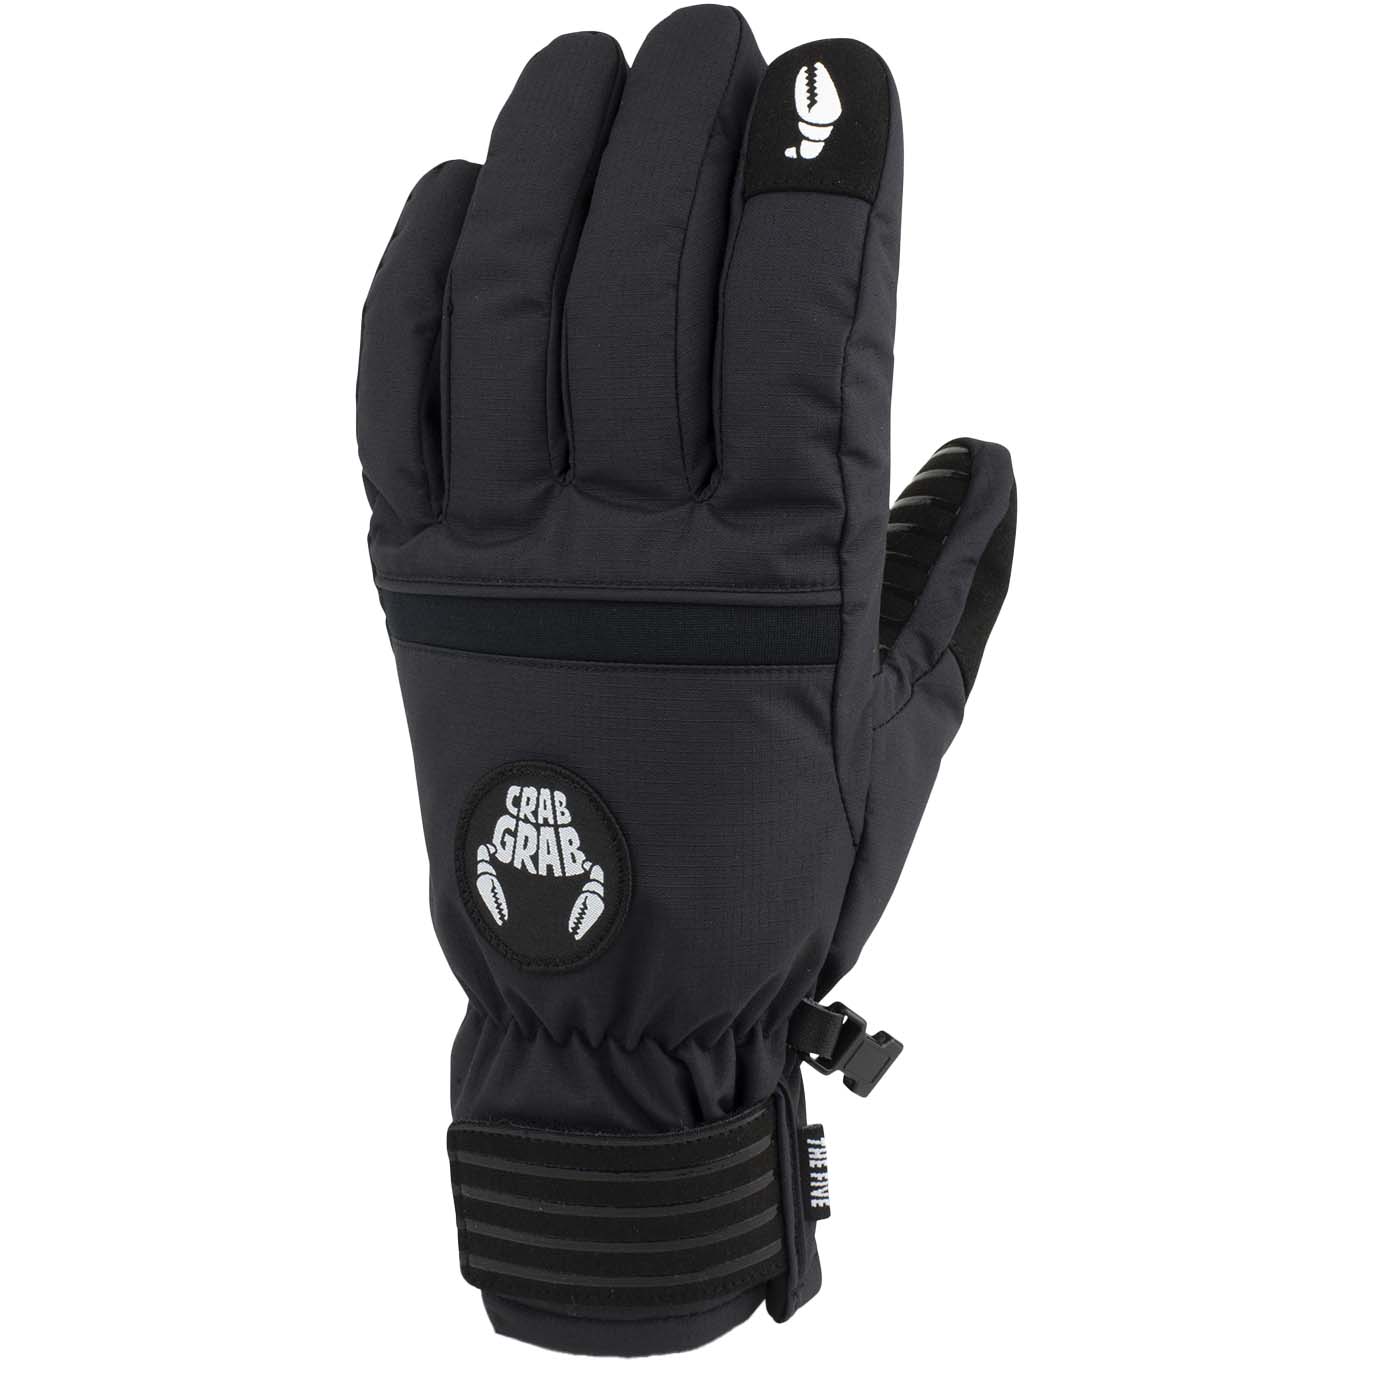 Crab Grab The Five Ski/Snowboard Gloves